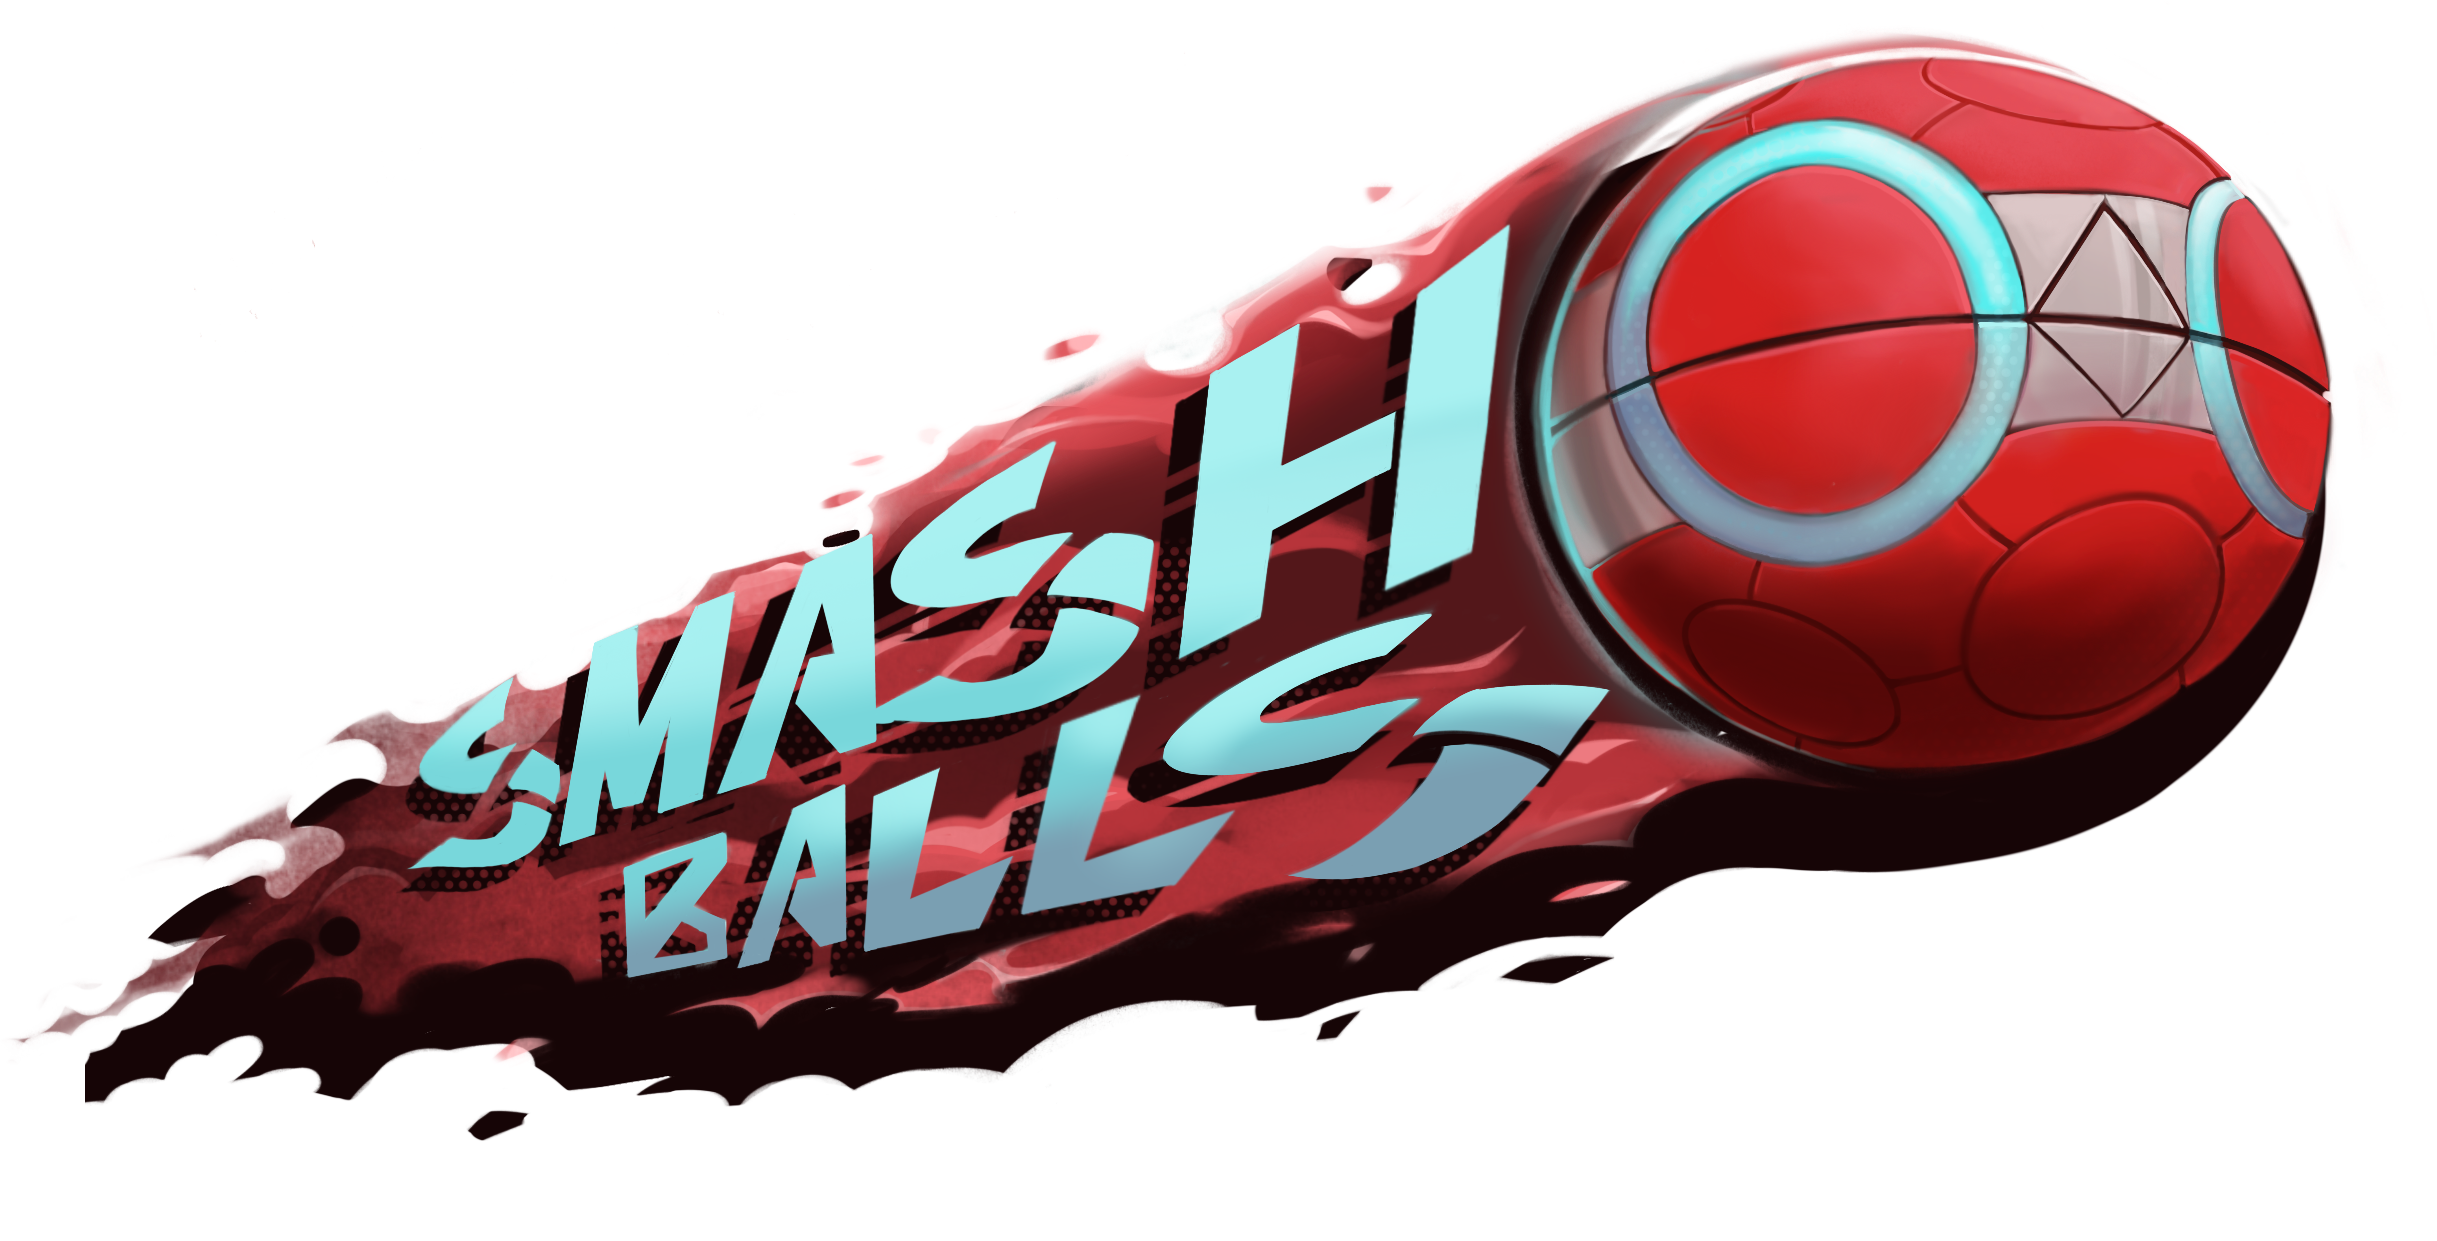 Smash Balls